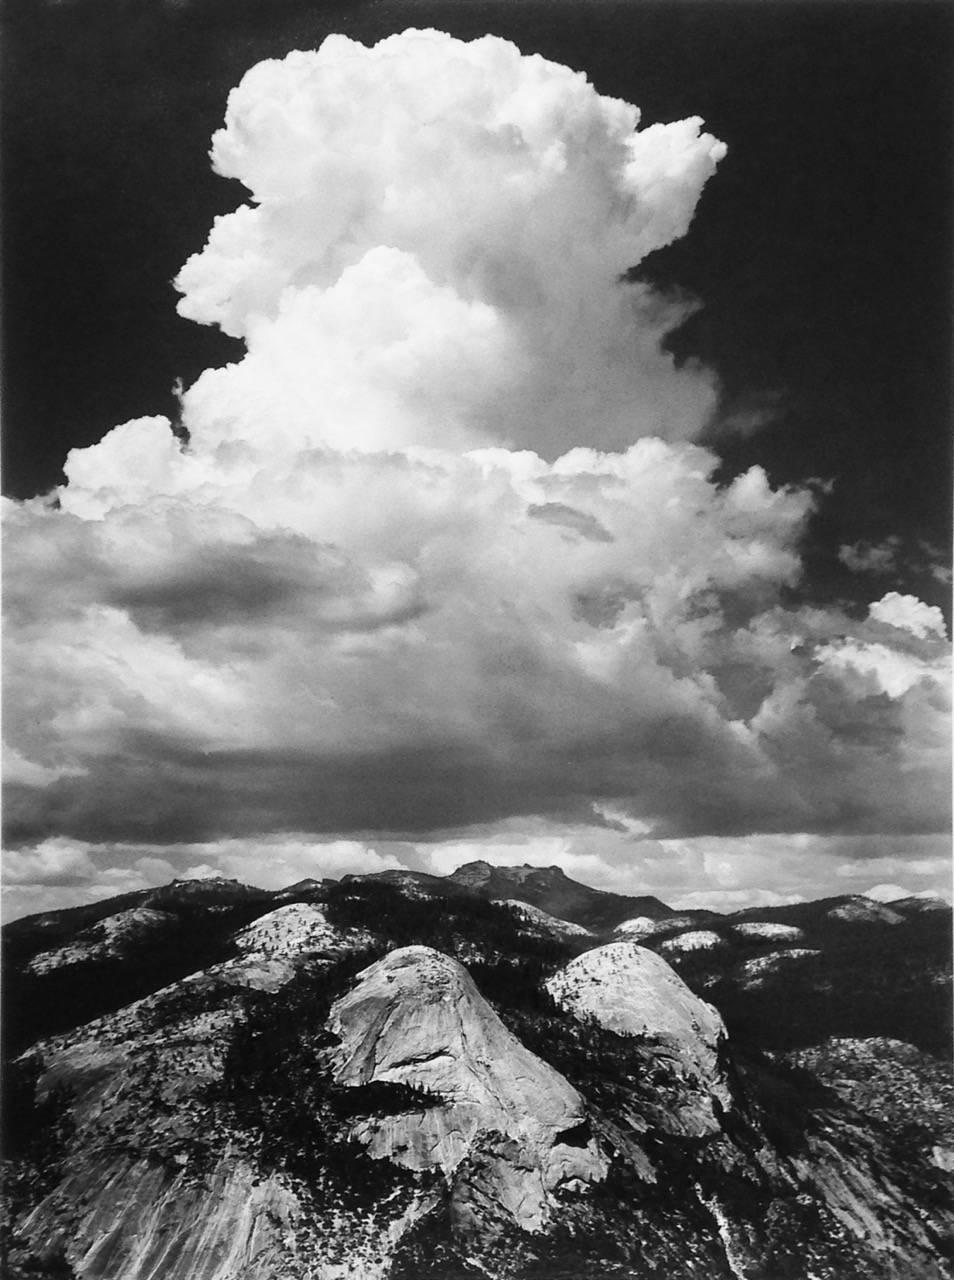 Ansel Adams Landscape Photograph - Thunderhead from Glacier Point, Yosemite National Park, California